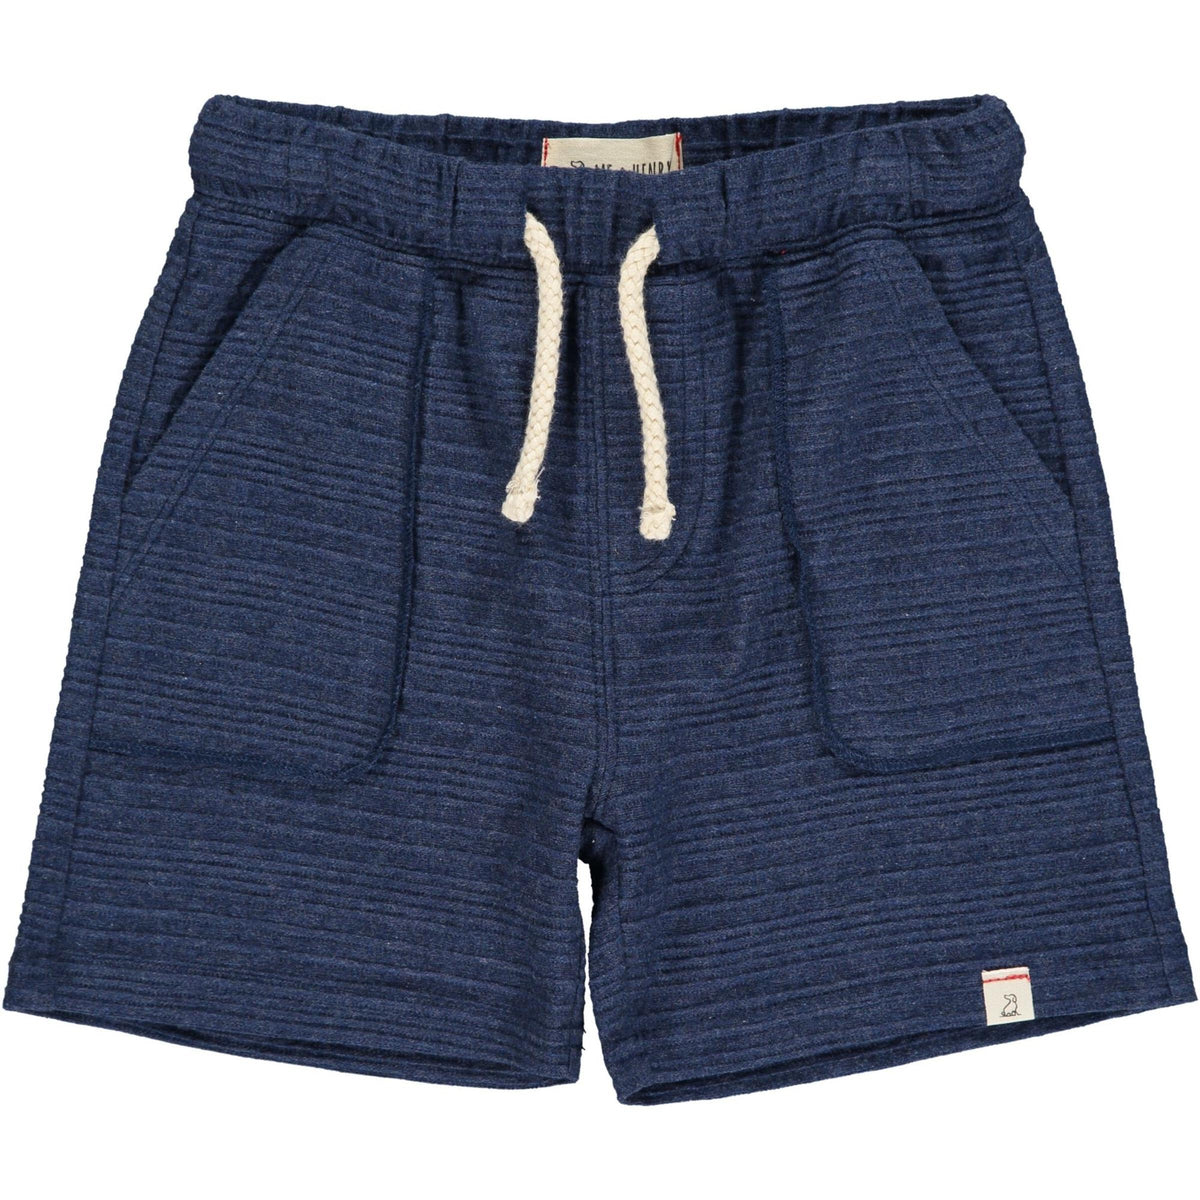 Bluepeter Shorts